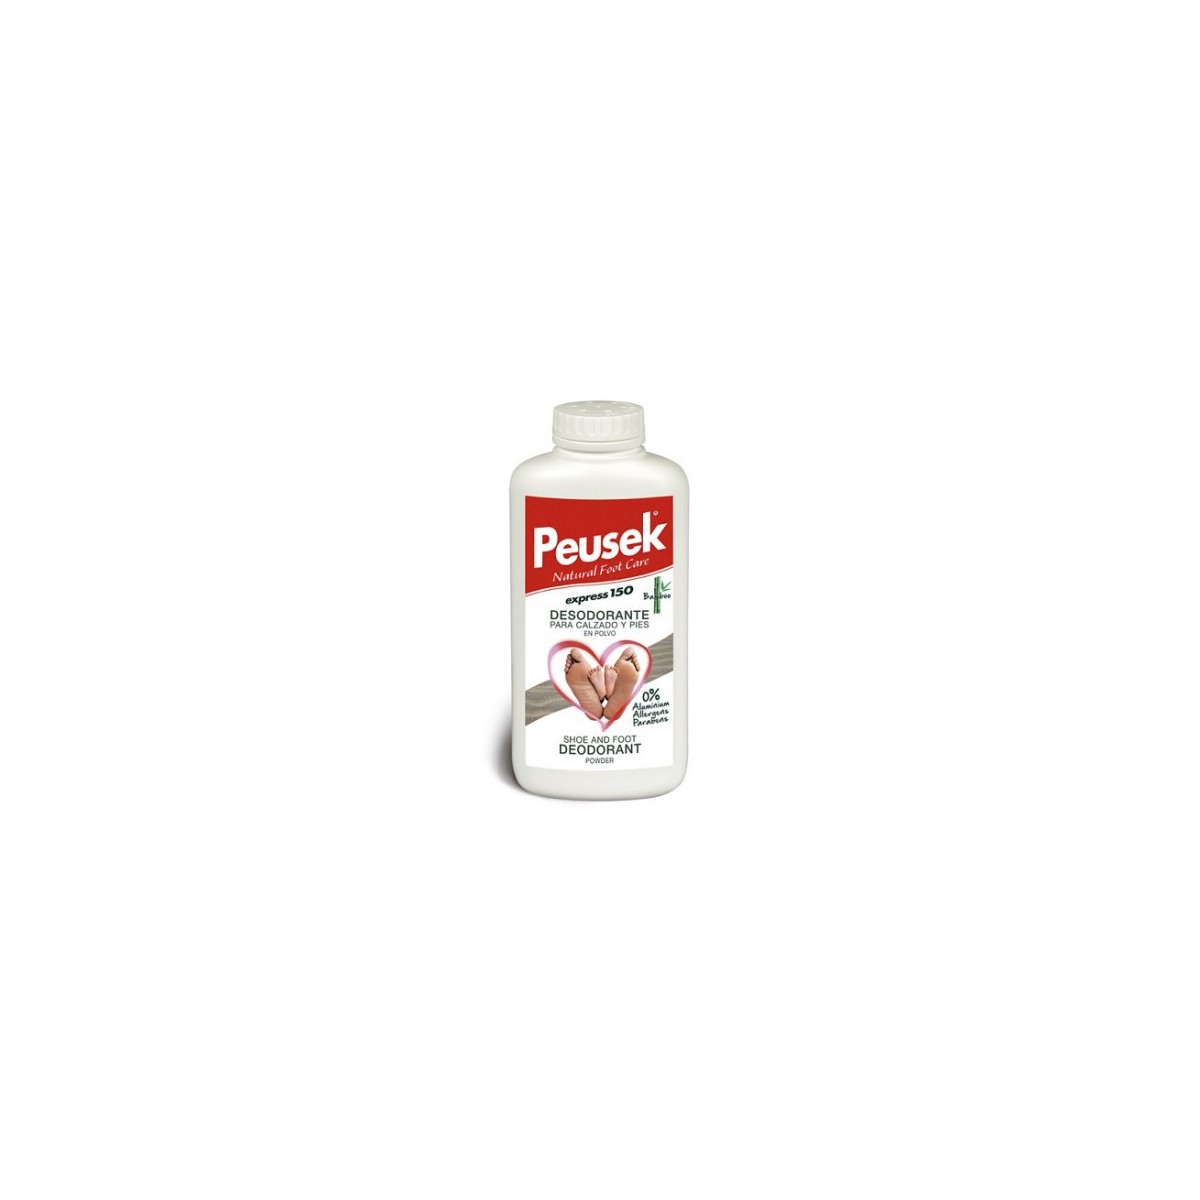 Peusek Express Desodorante Polvo 150g